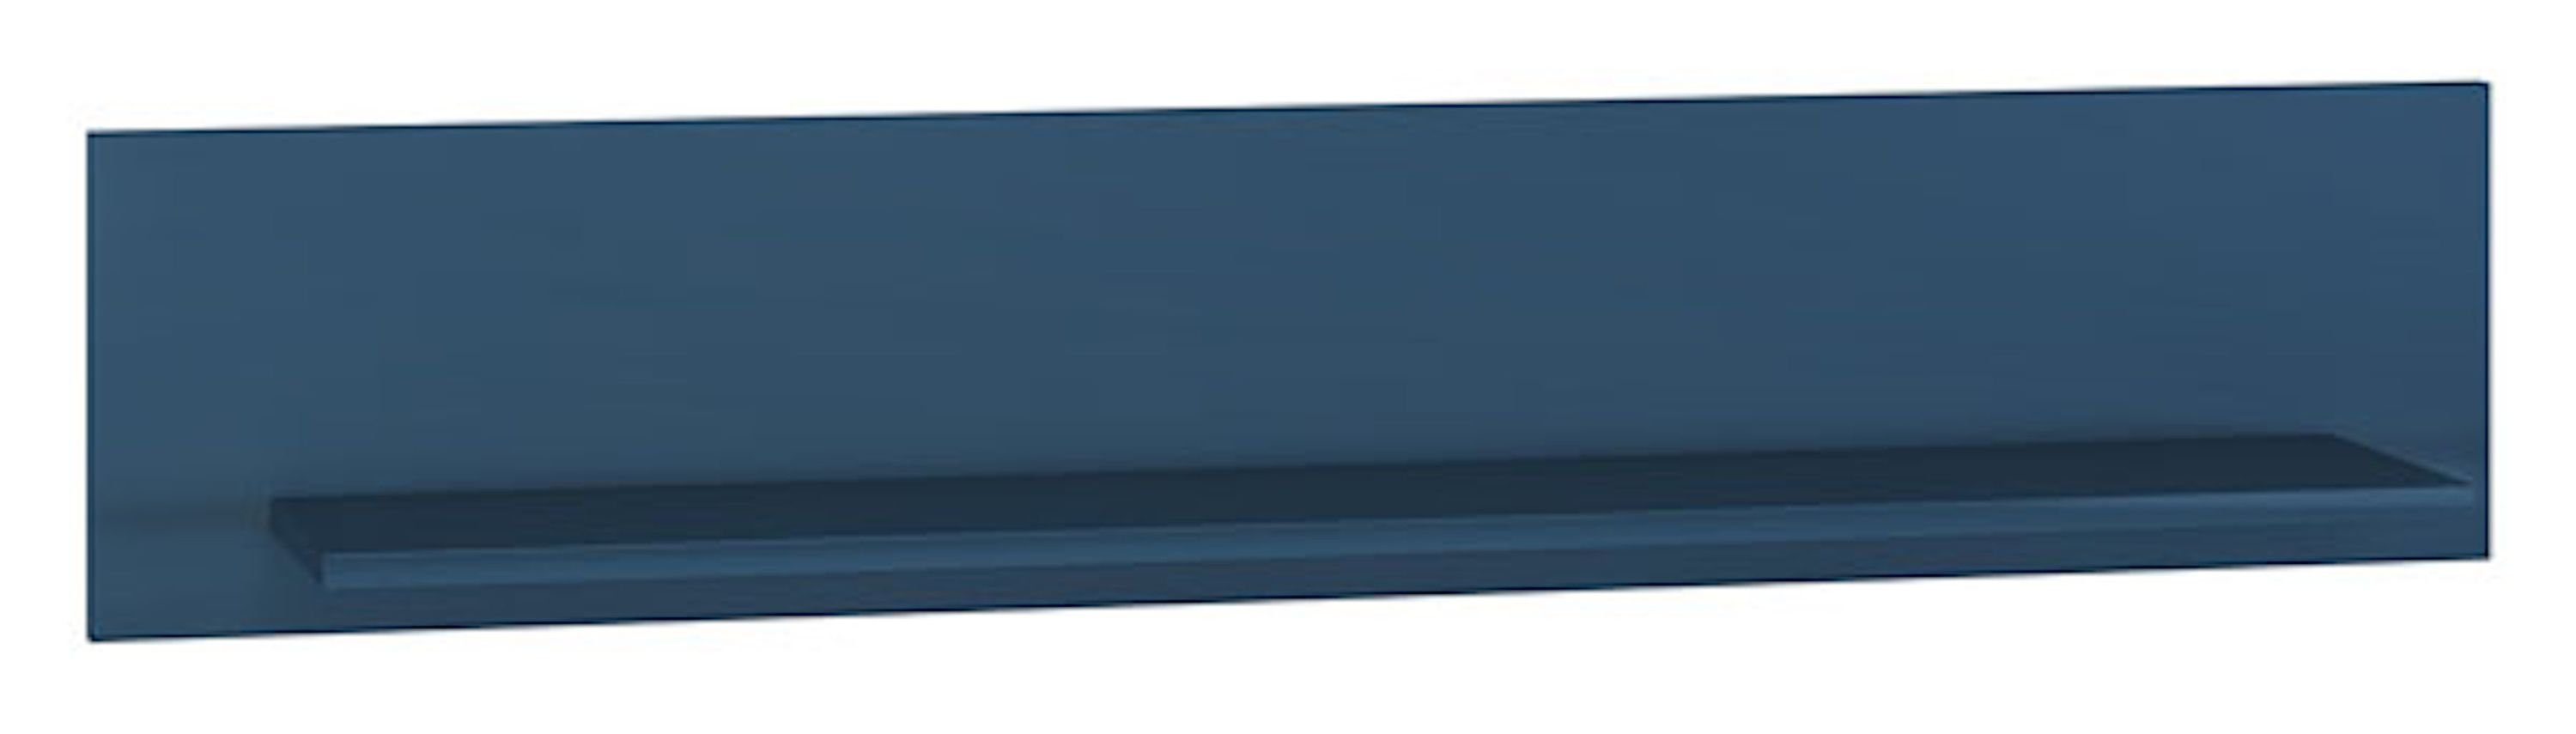 Feldmann-Wohnen Wandboard Marine, 120cm dunkelblau